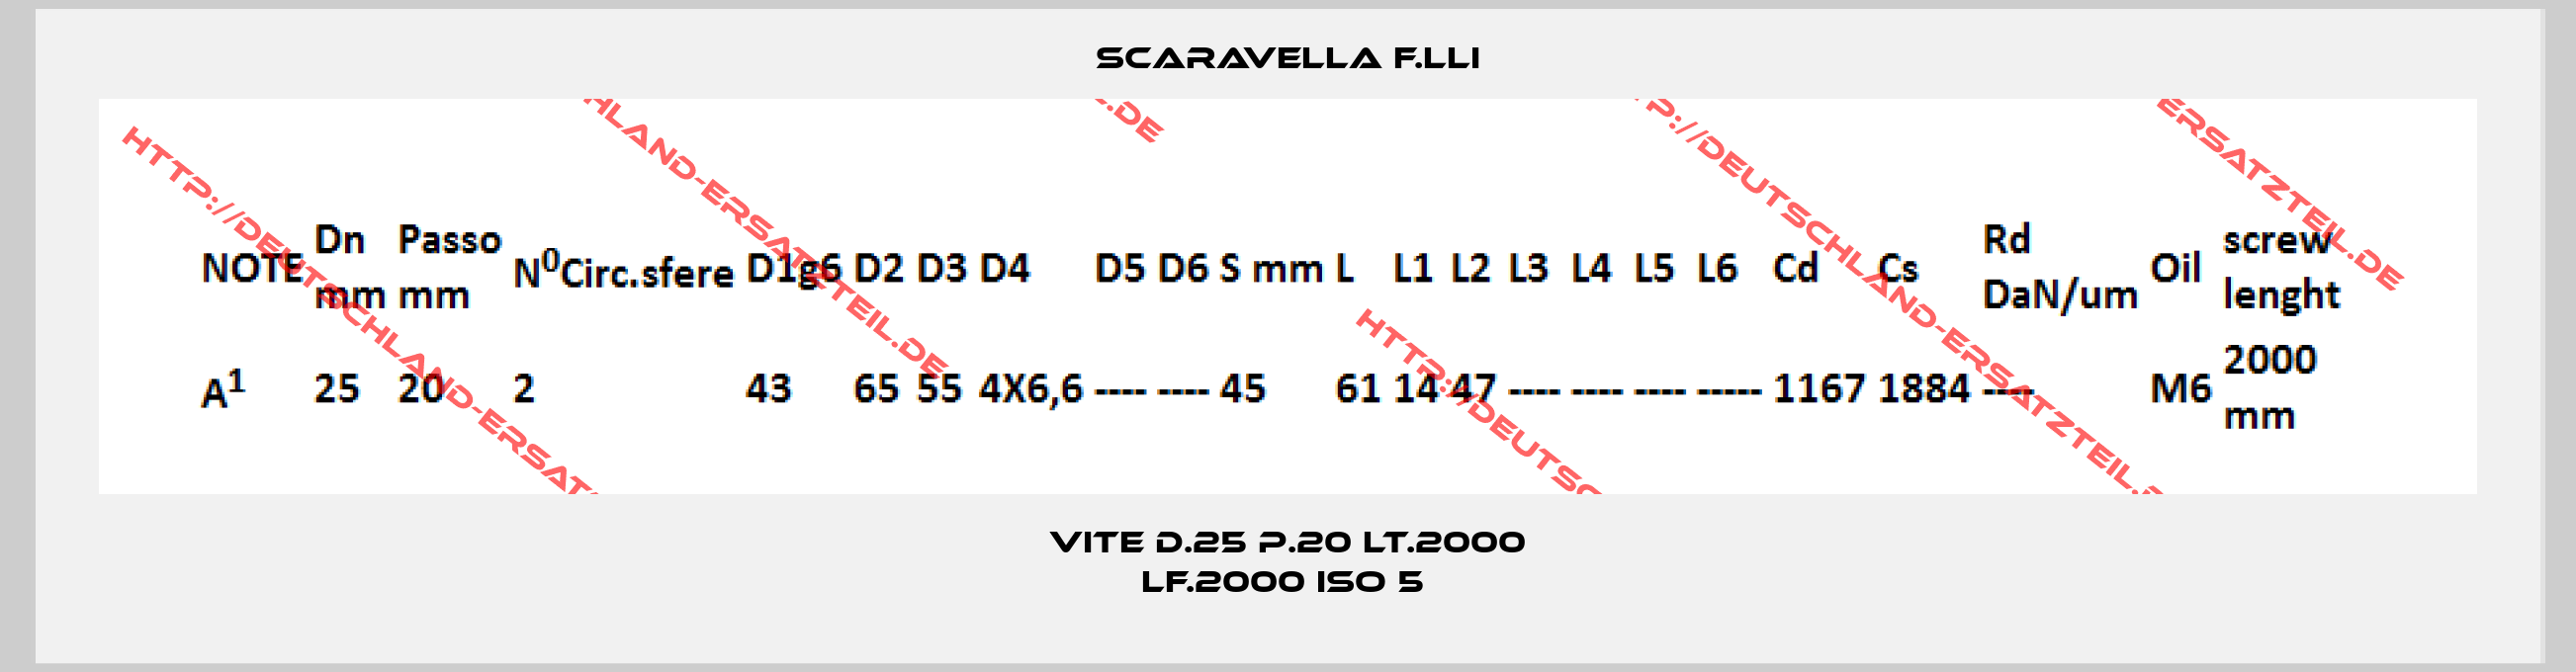 Scaravella F.lli-VITE D.25 P.20 LT.2000 LF.2000 ISO 5 